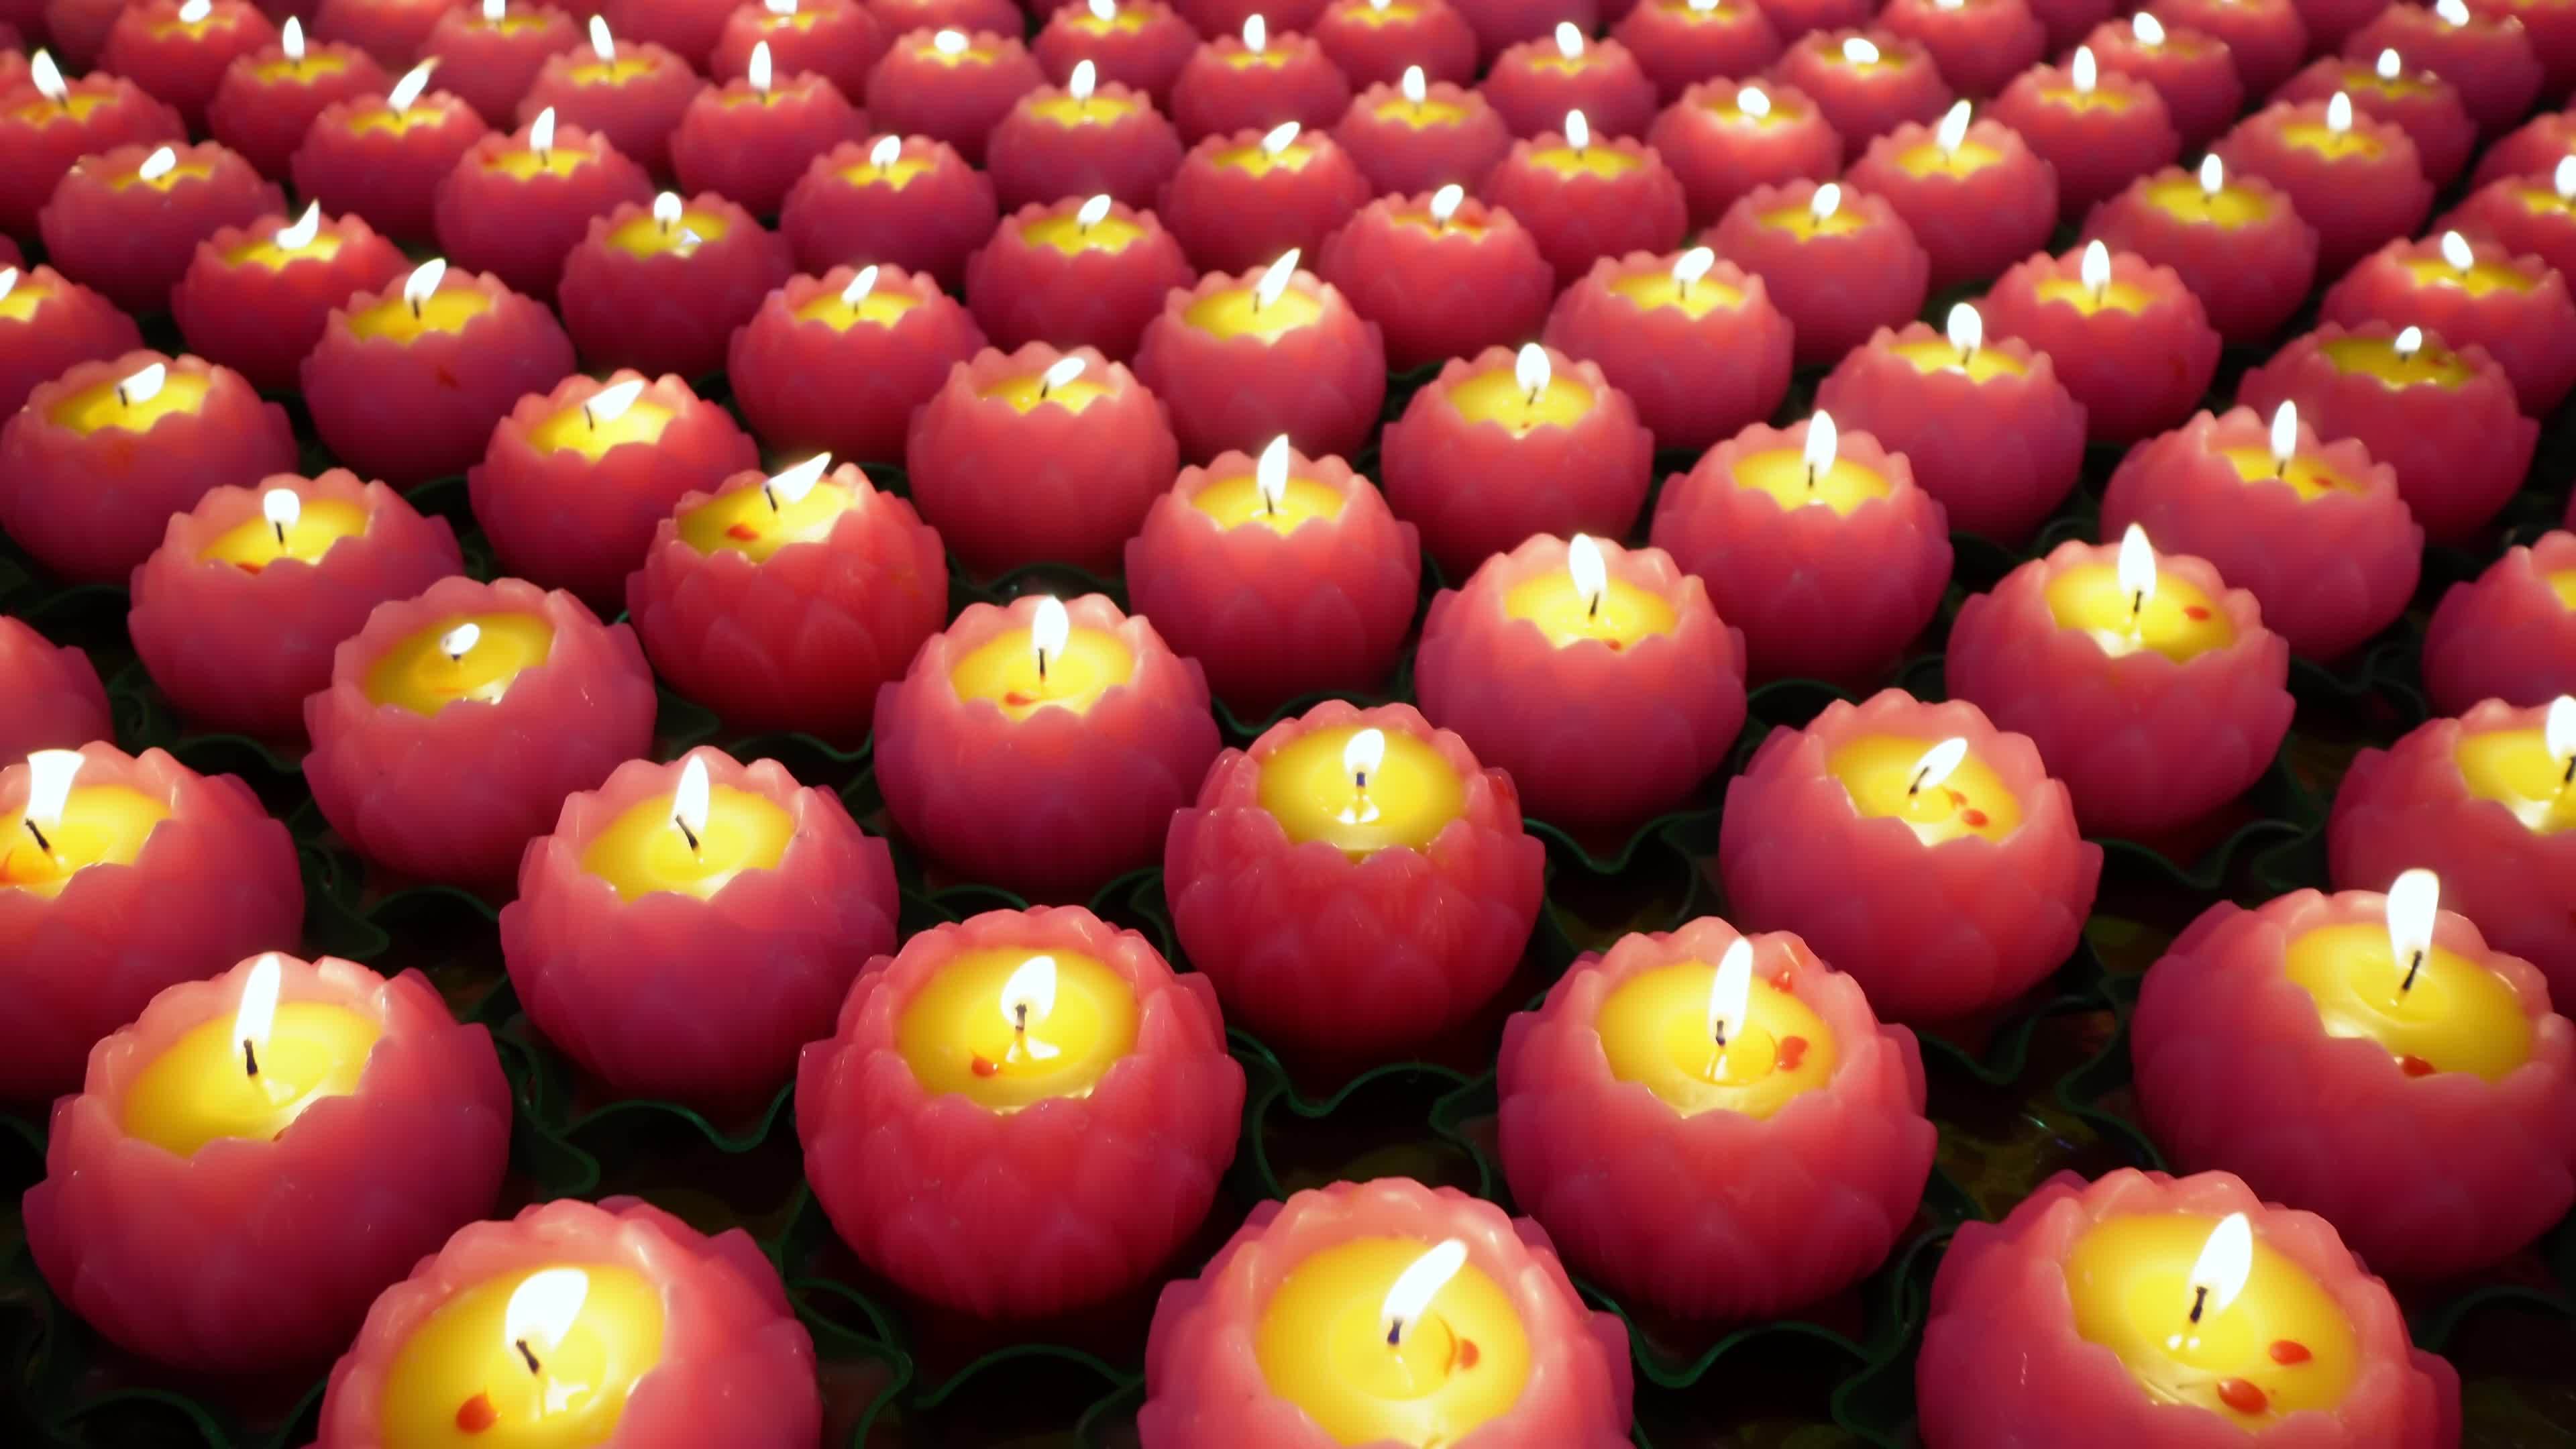 Slow move over lotus flower shape candle burn together